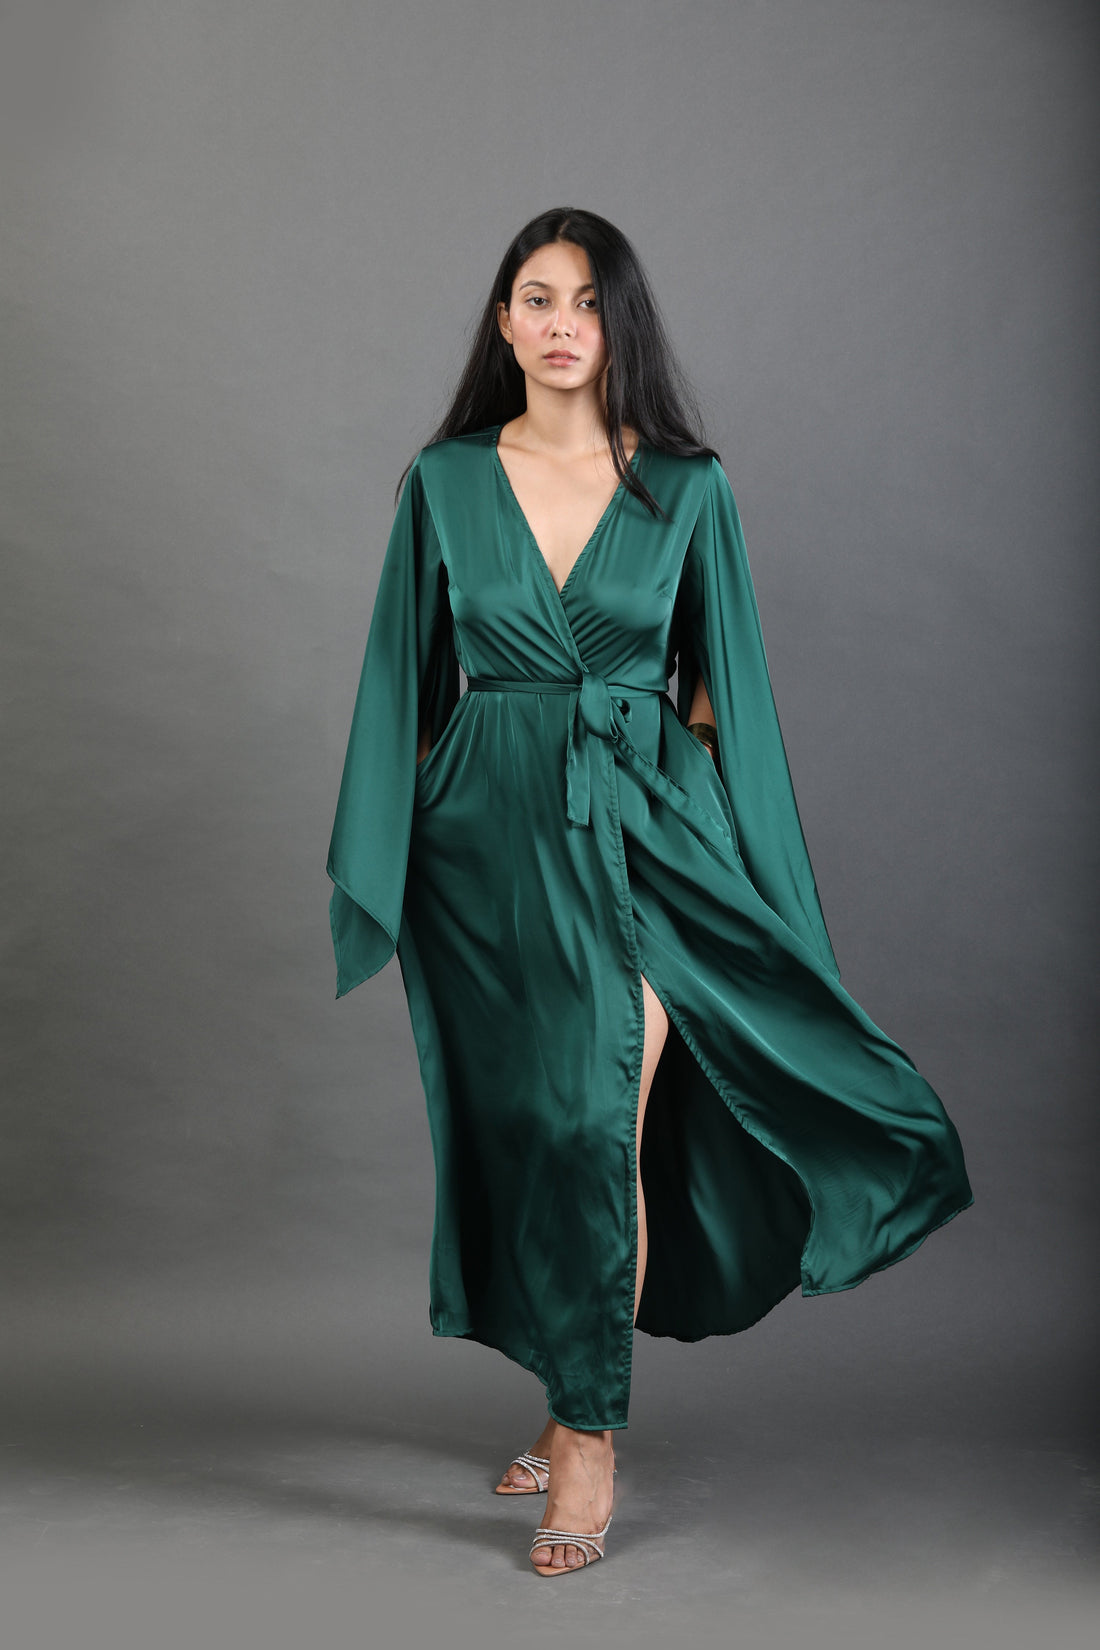 Butterfly Sleeve Wrap around Dress - Emerald Green